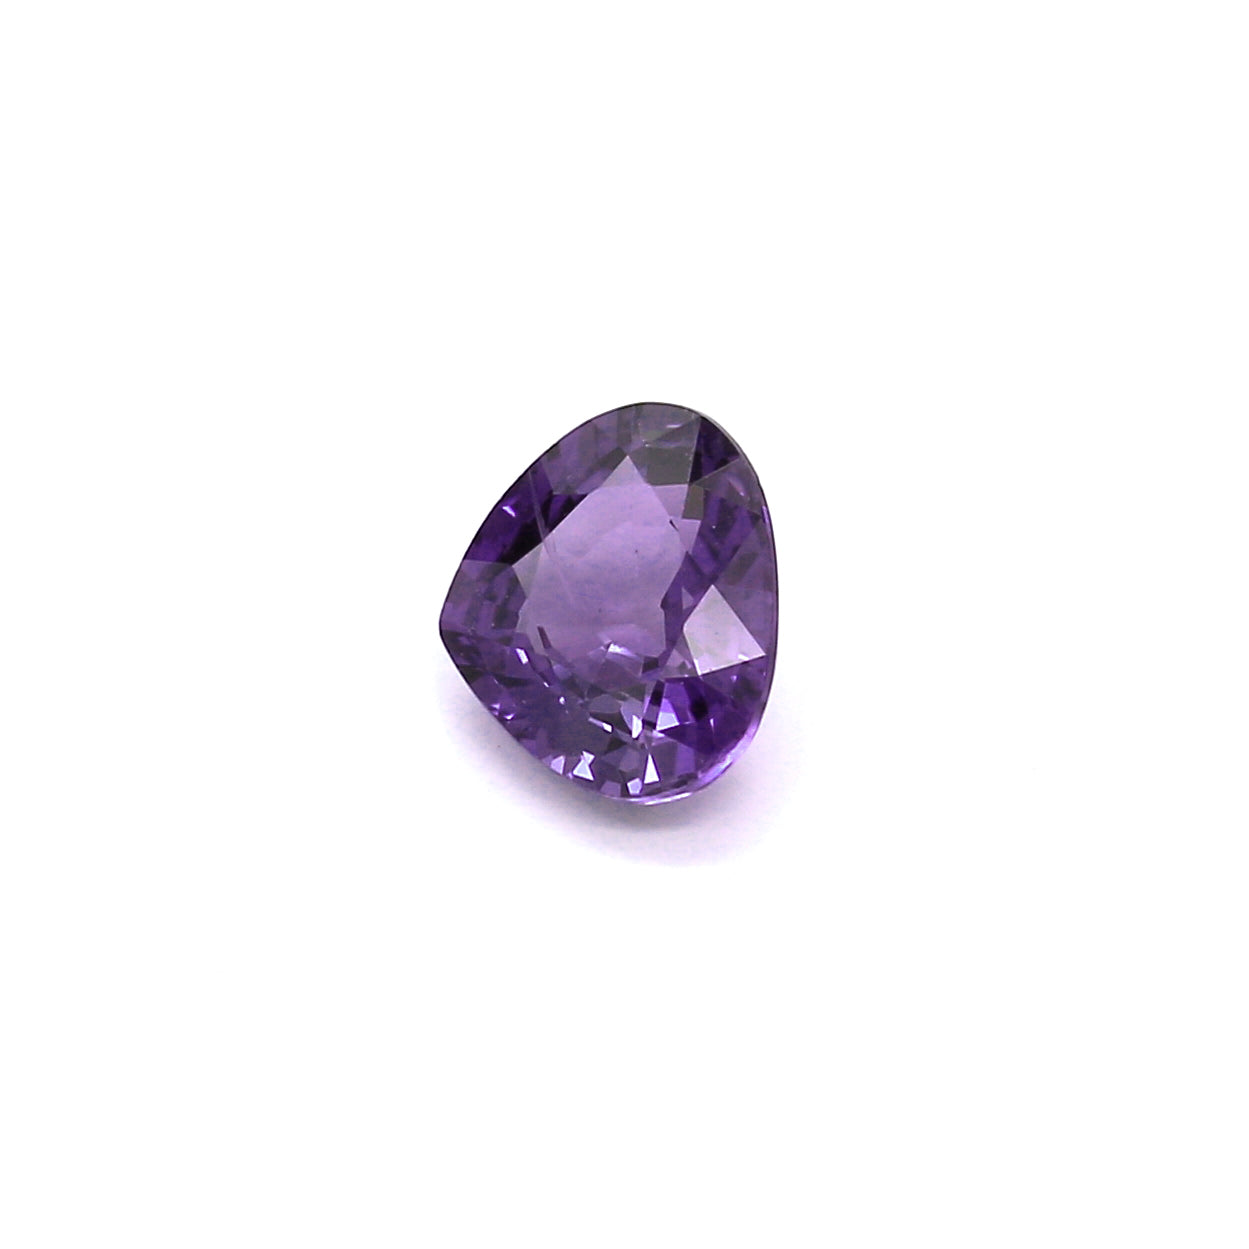 1.29ct Violetish Blue / Purple, Pear Shape Colour Change Sapphire, Heated, Sri Lanka - 6.26 x 7.33 x 3.49mm